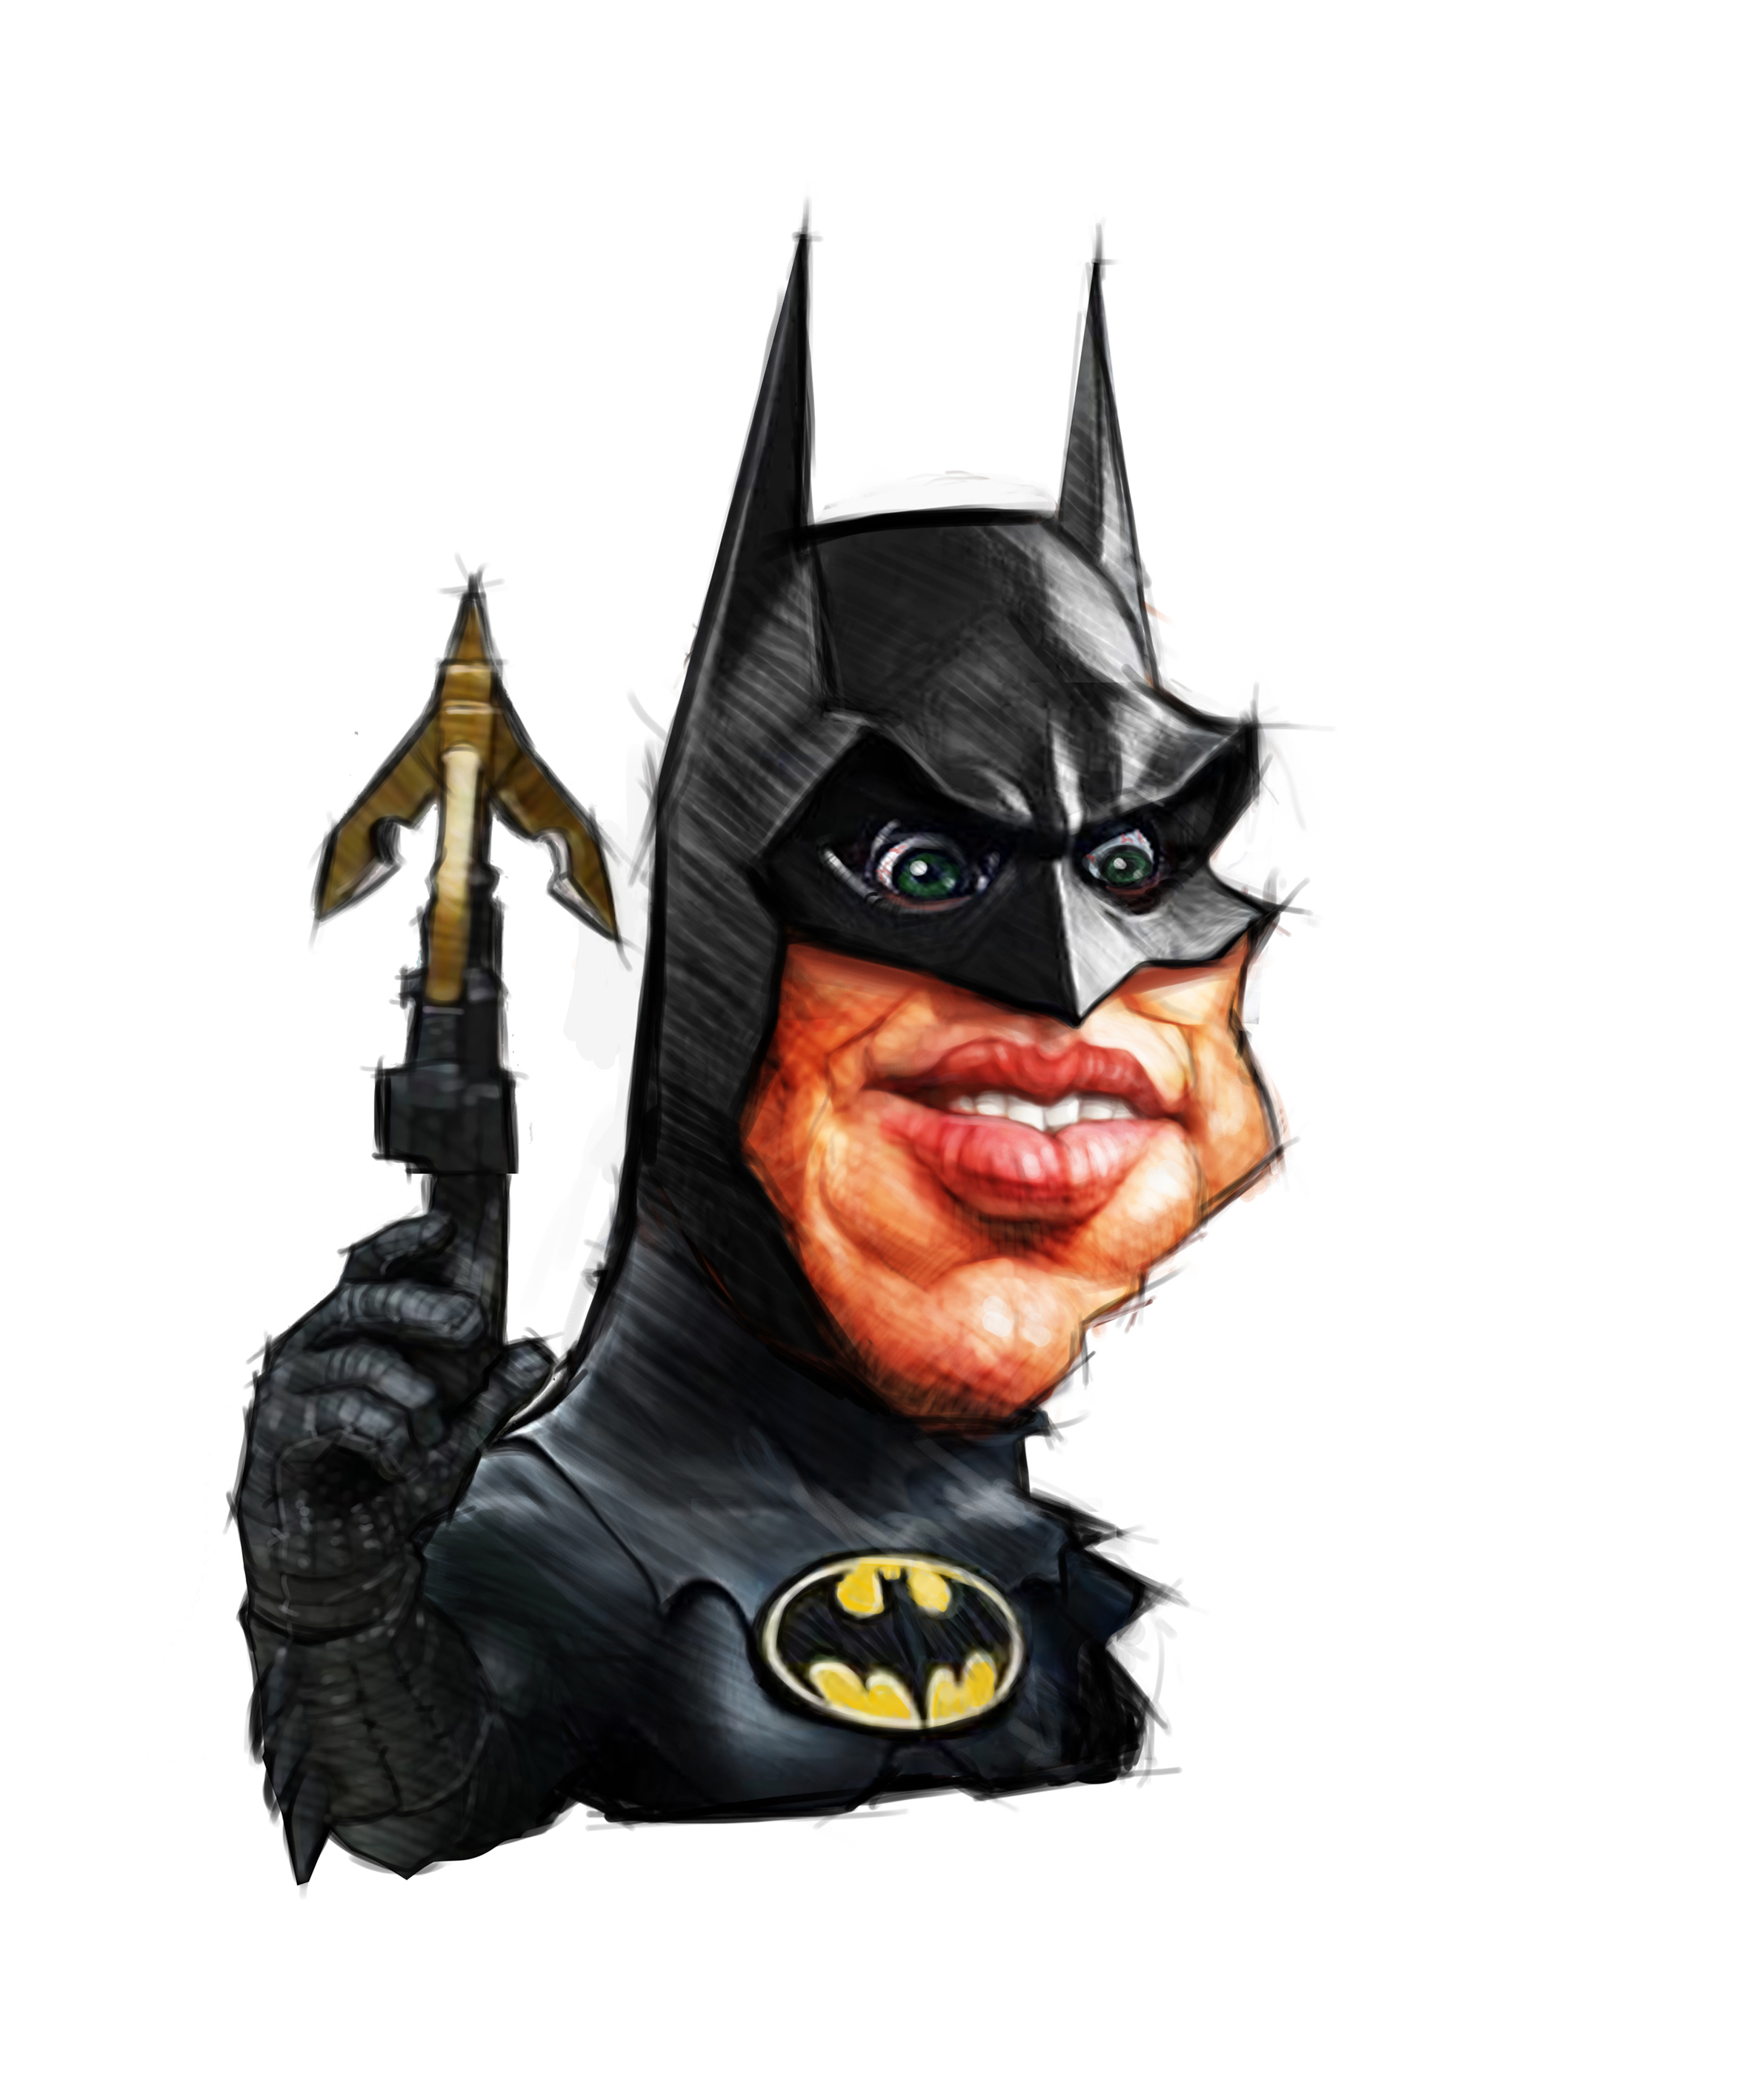 Caricatura do Batman by jeanmanara on DeviantArt